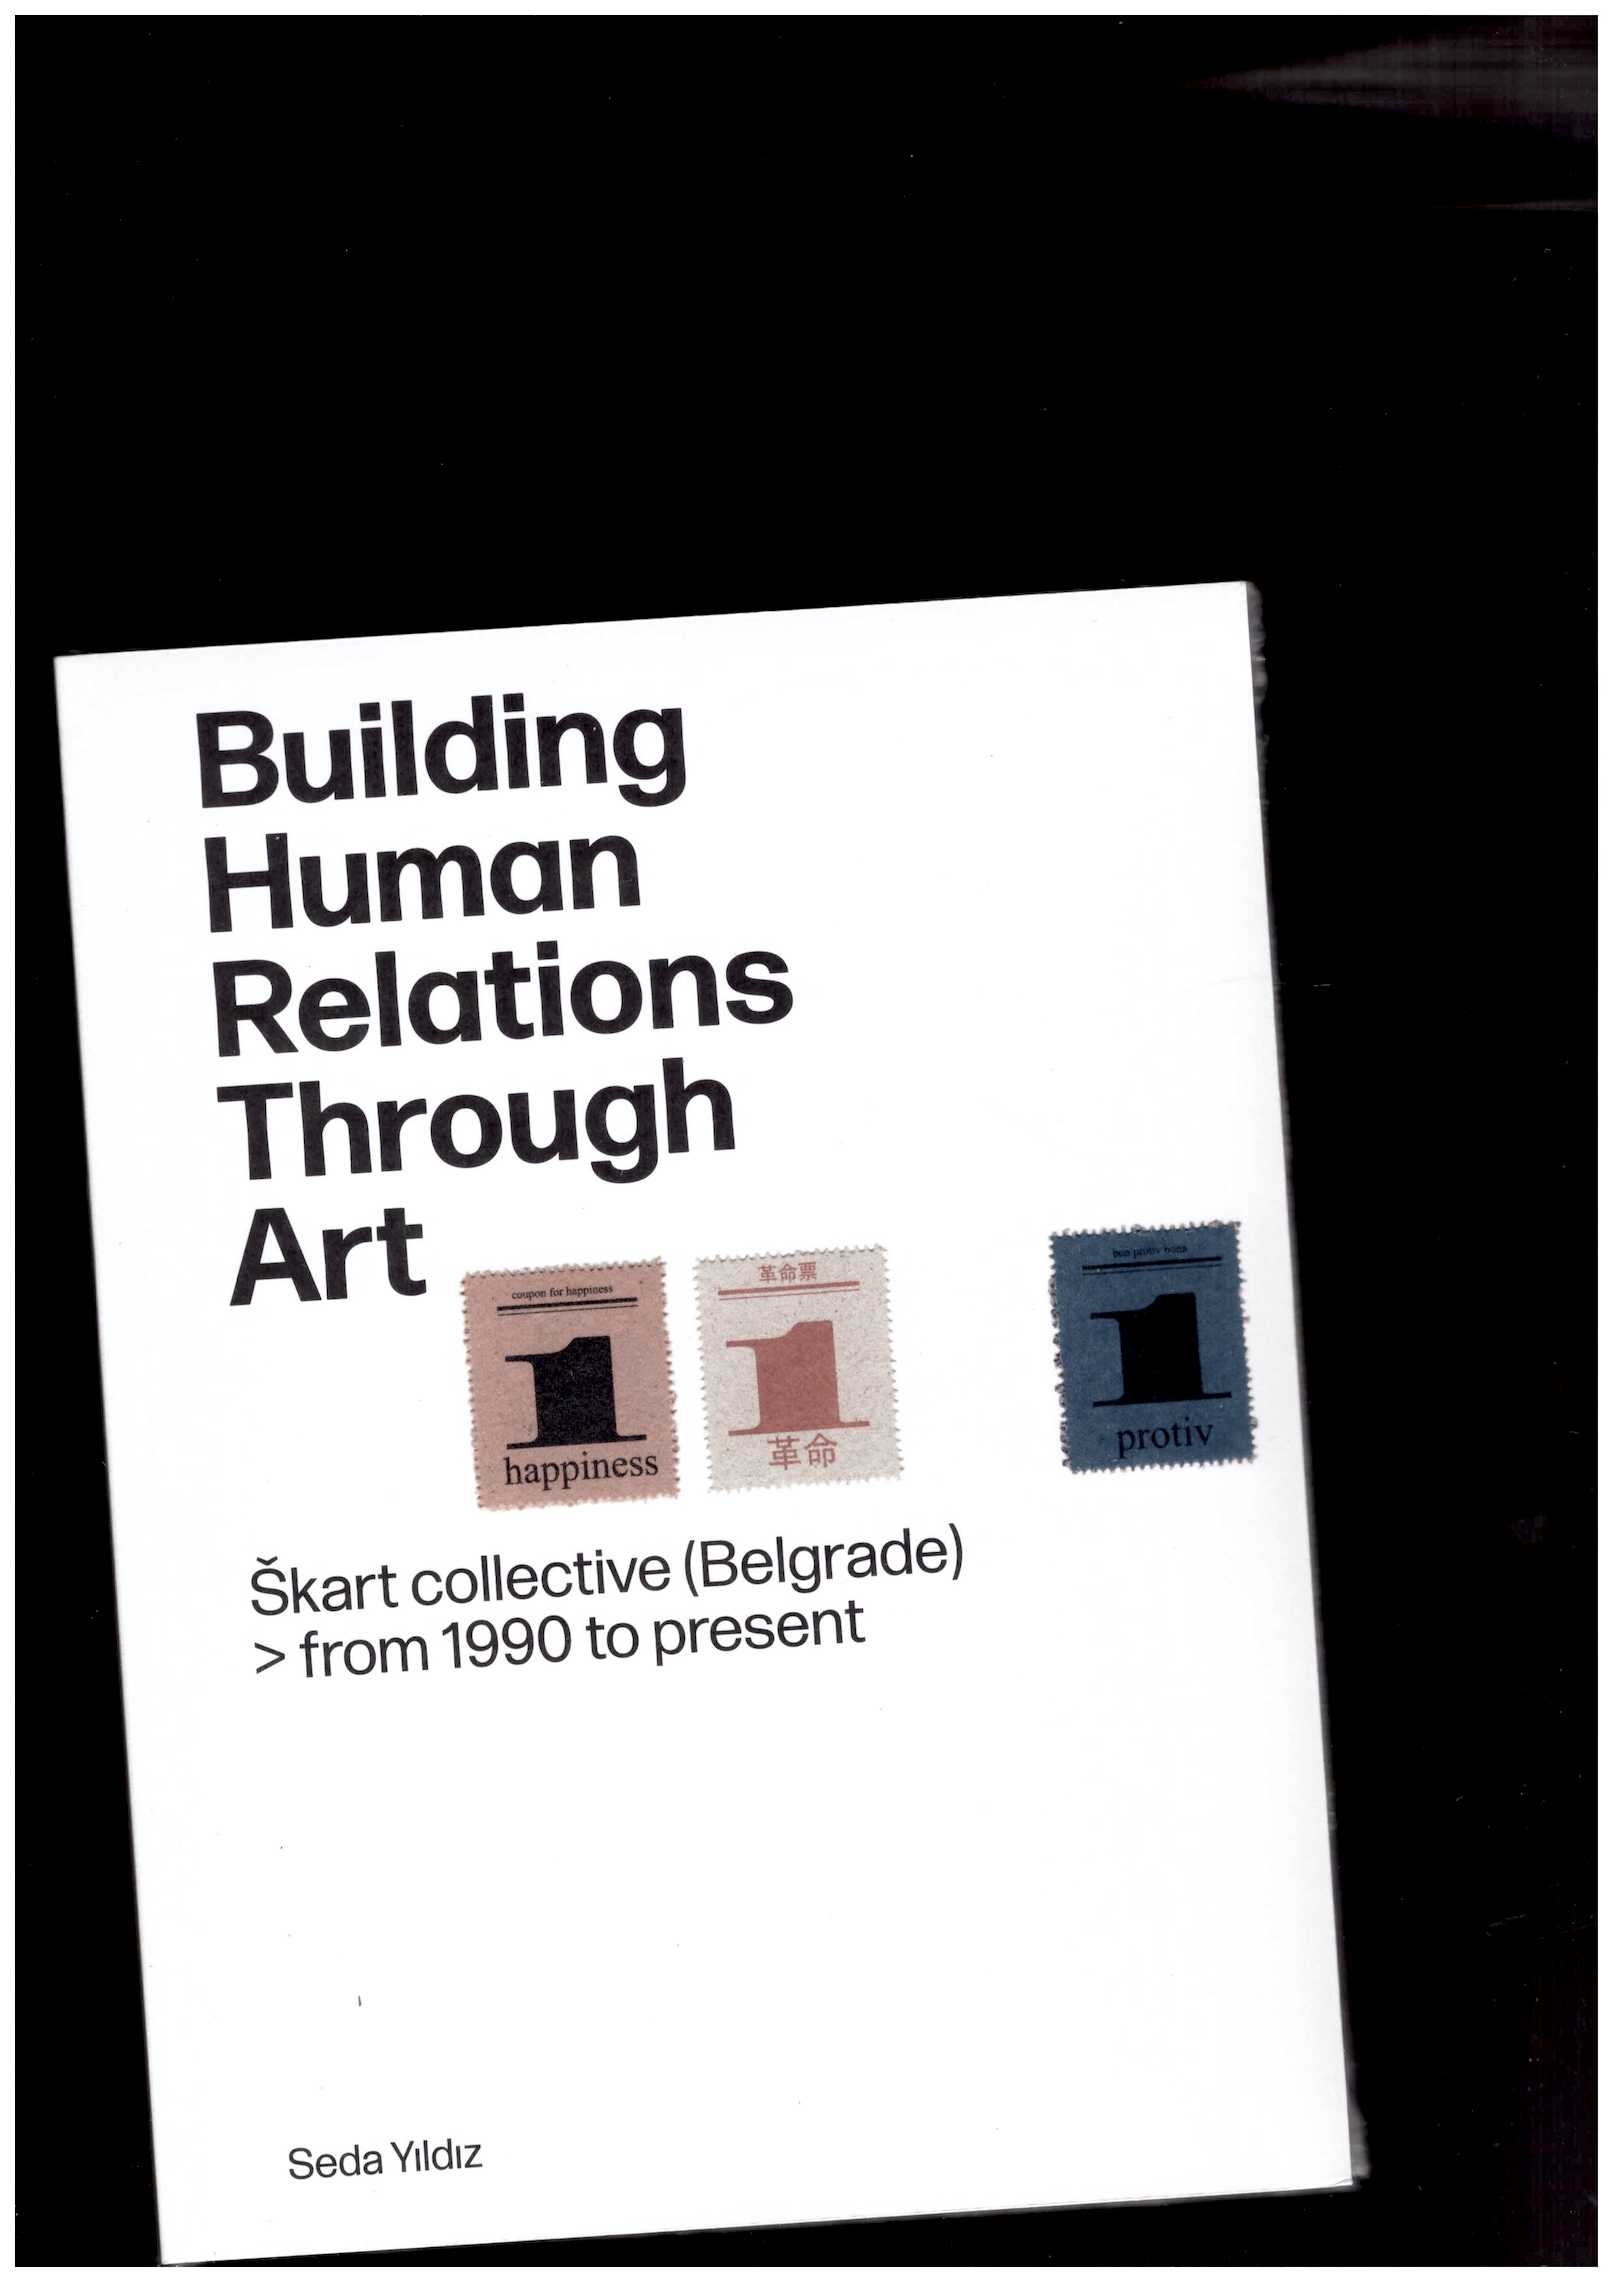 ŠKART; YILDIZ, Seda (ed.) - Building Human Relations Through Art: Belgrade art collective Škart, from 1990 to present